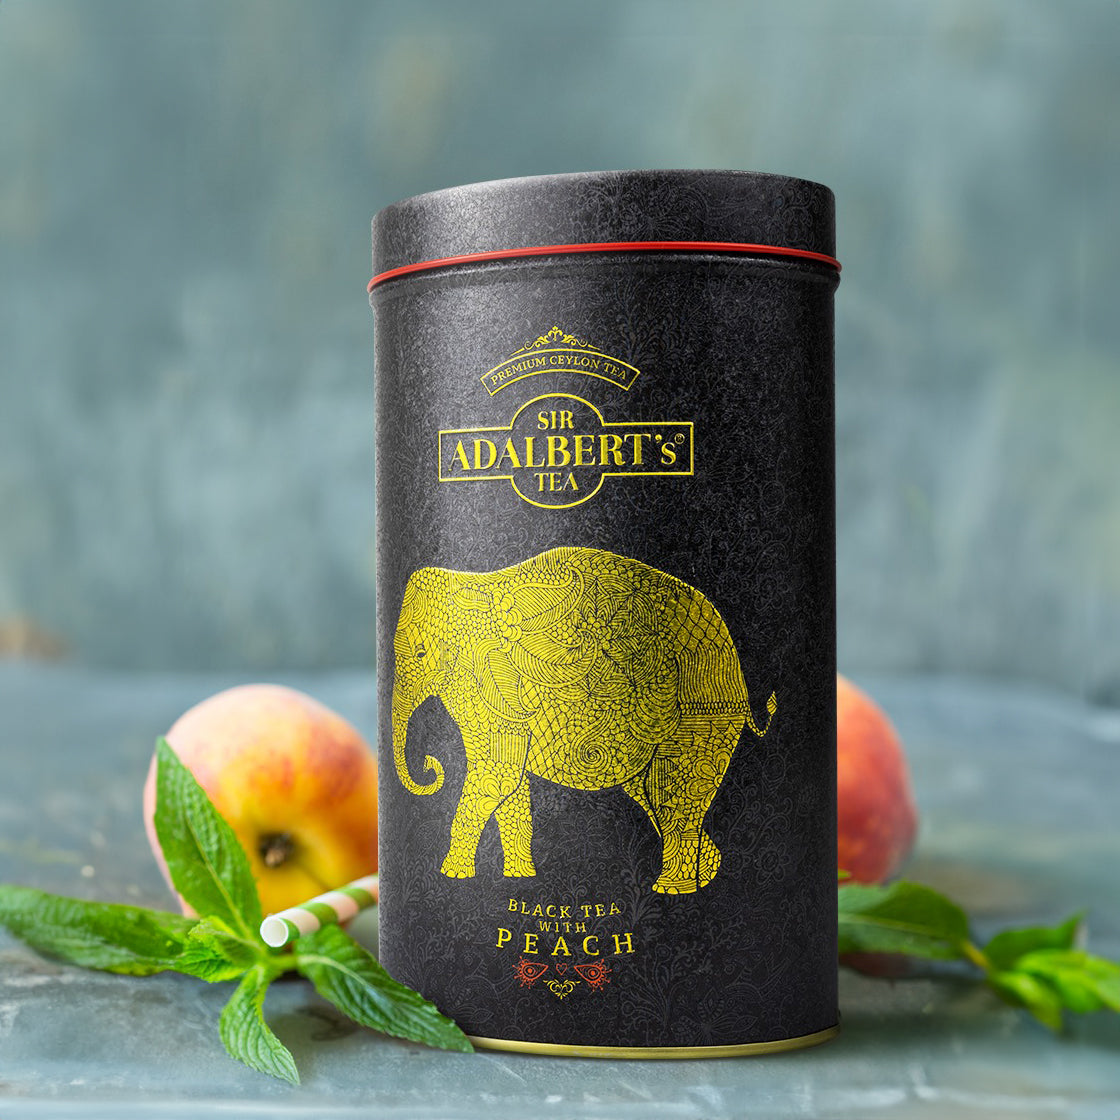 Adalbert's Tea BLACK TEA WITH PEACH - leaf 100g in a can